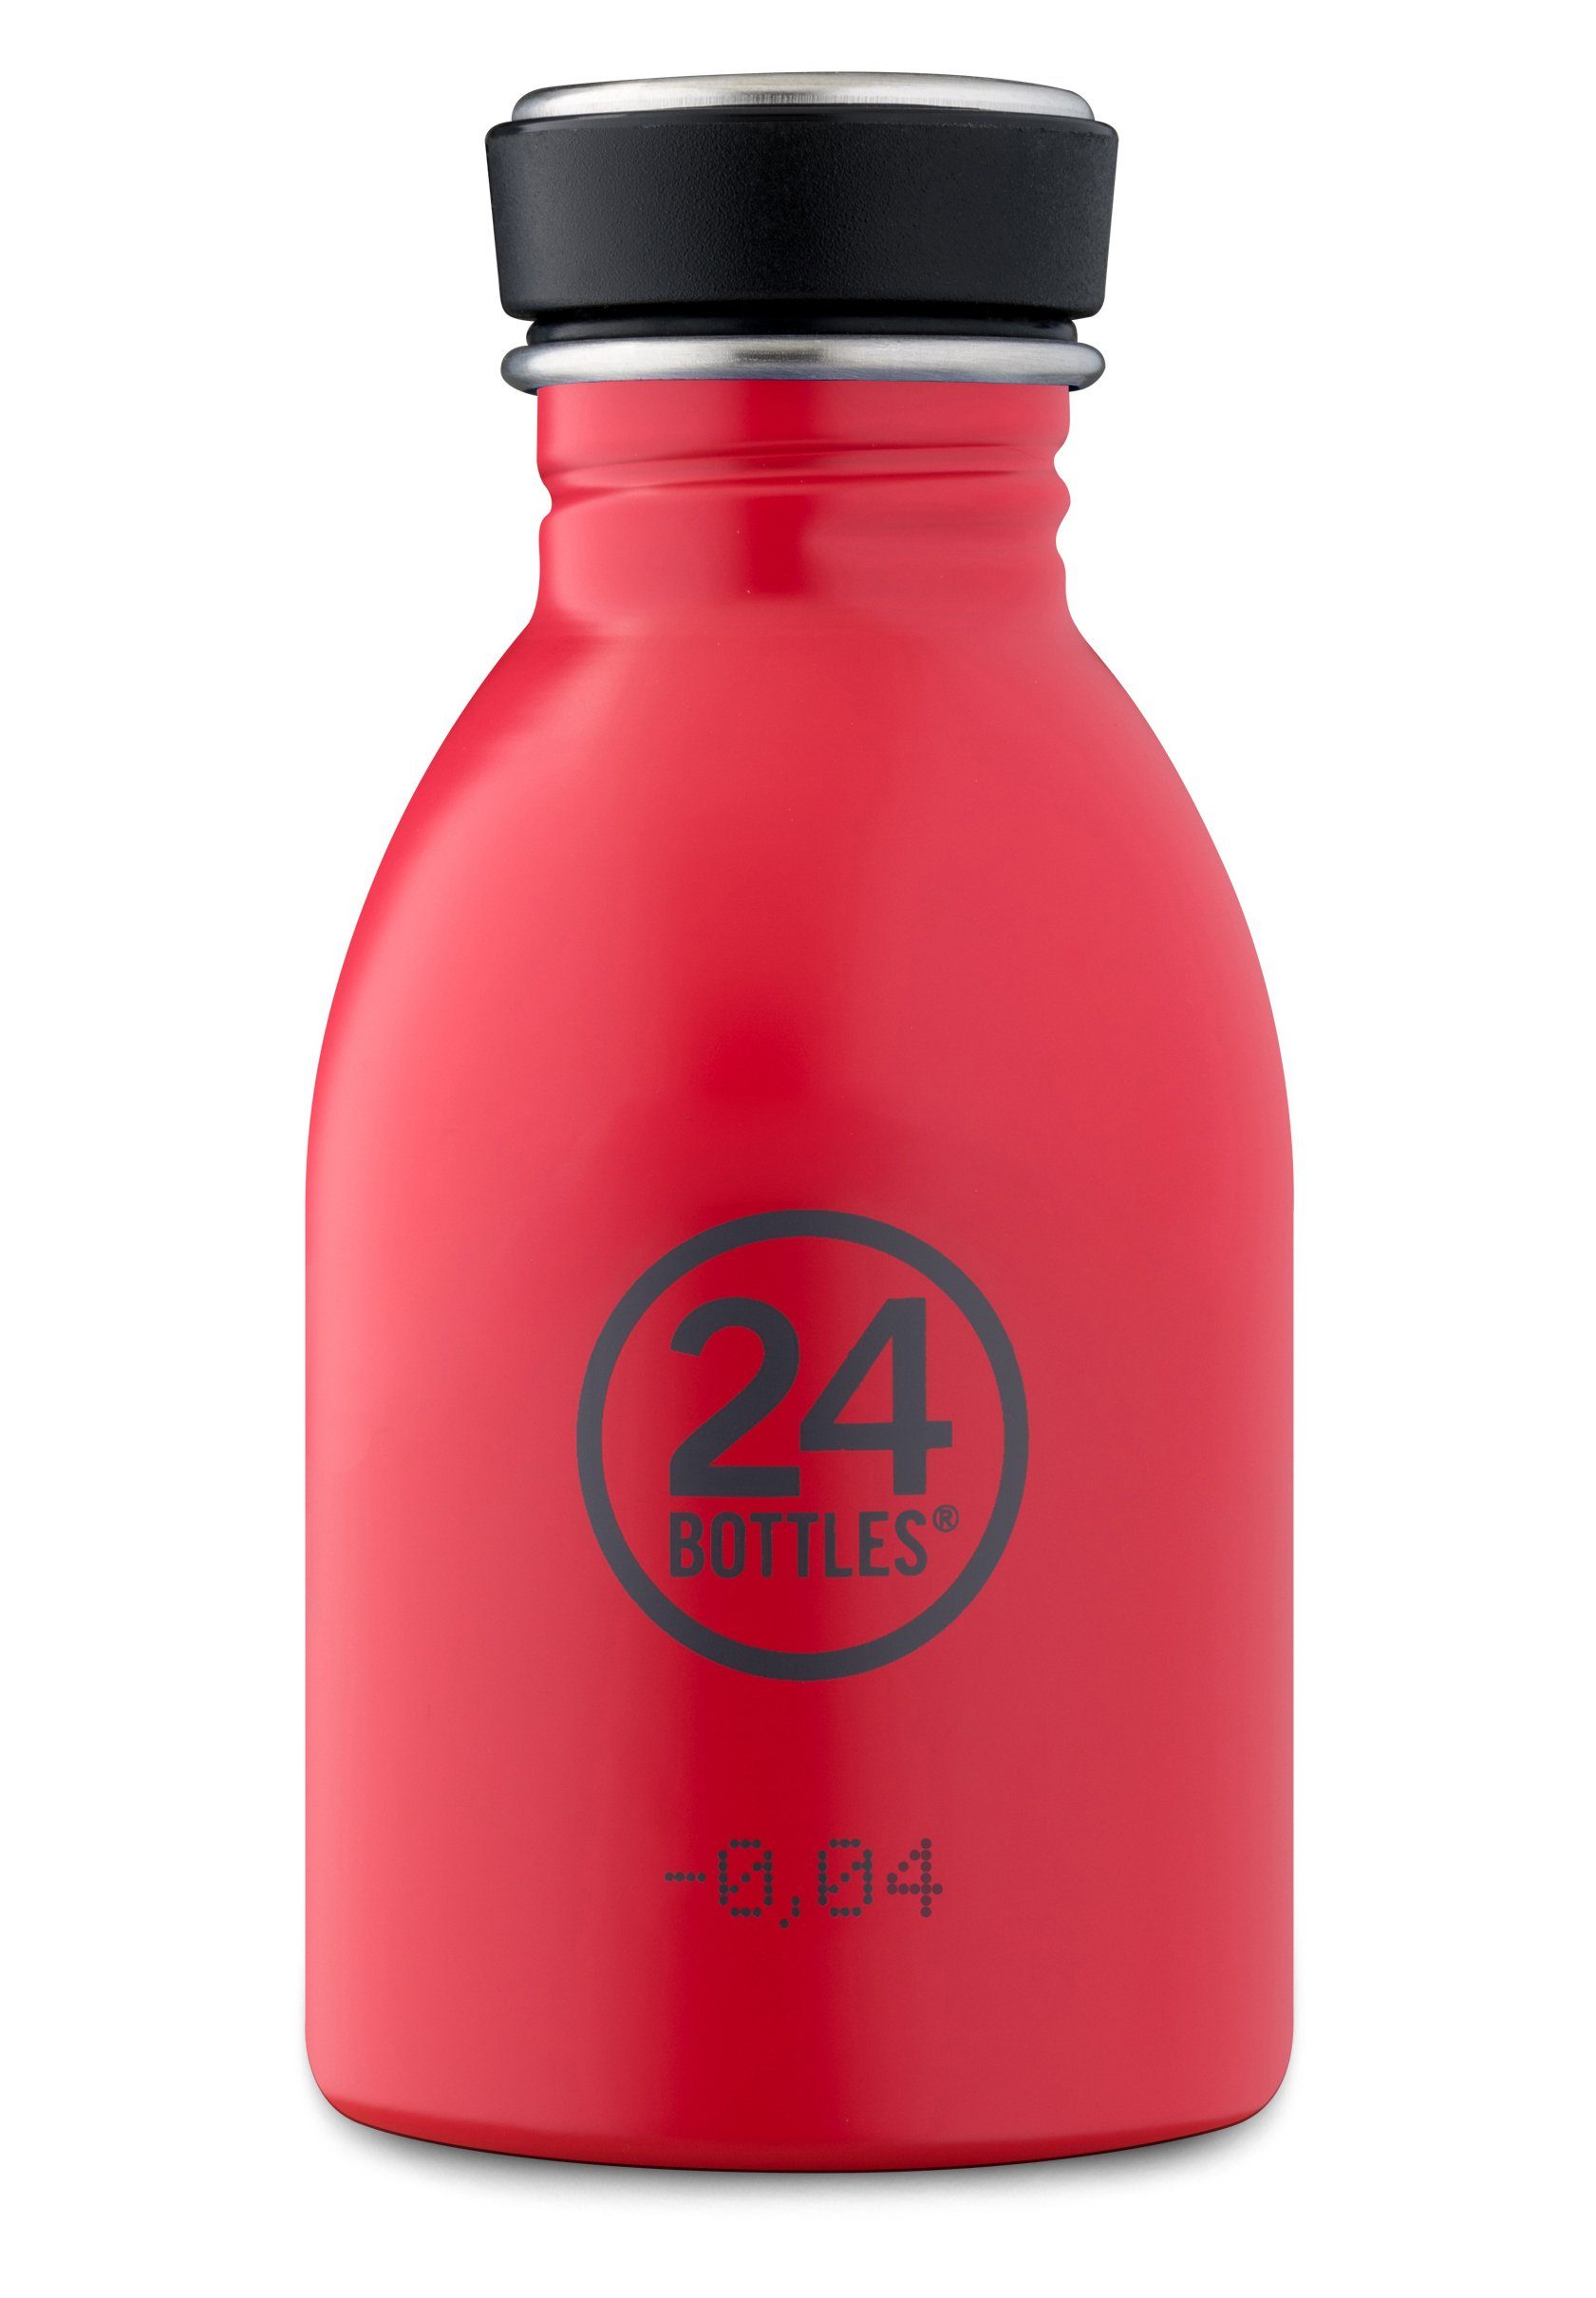 Trinkflasche Hot Red Bottles 24